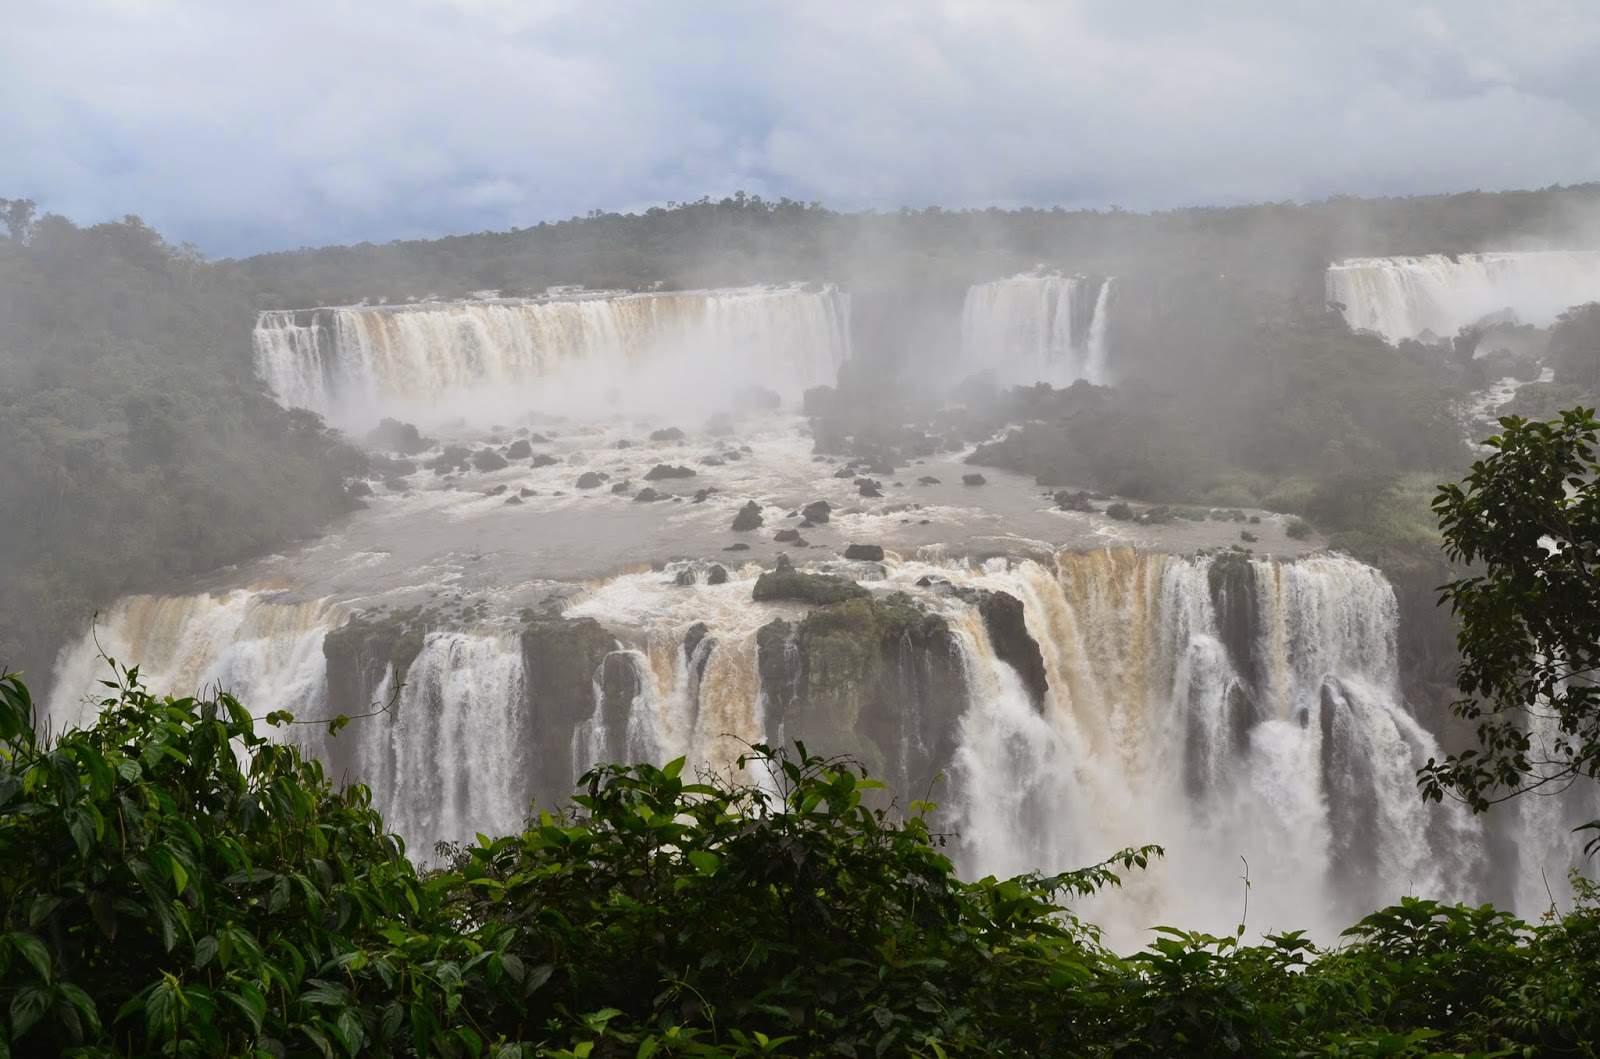 The falls at Iguaçu National Park in Brazil